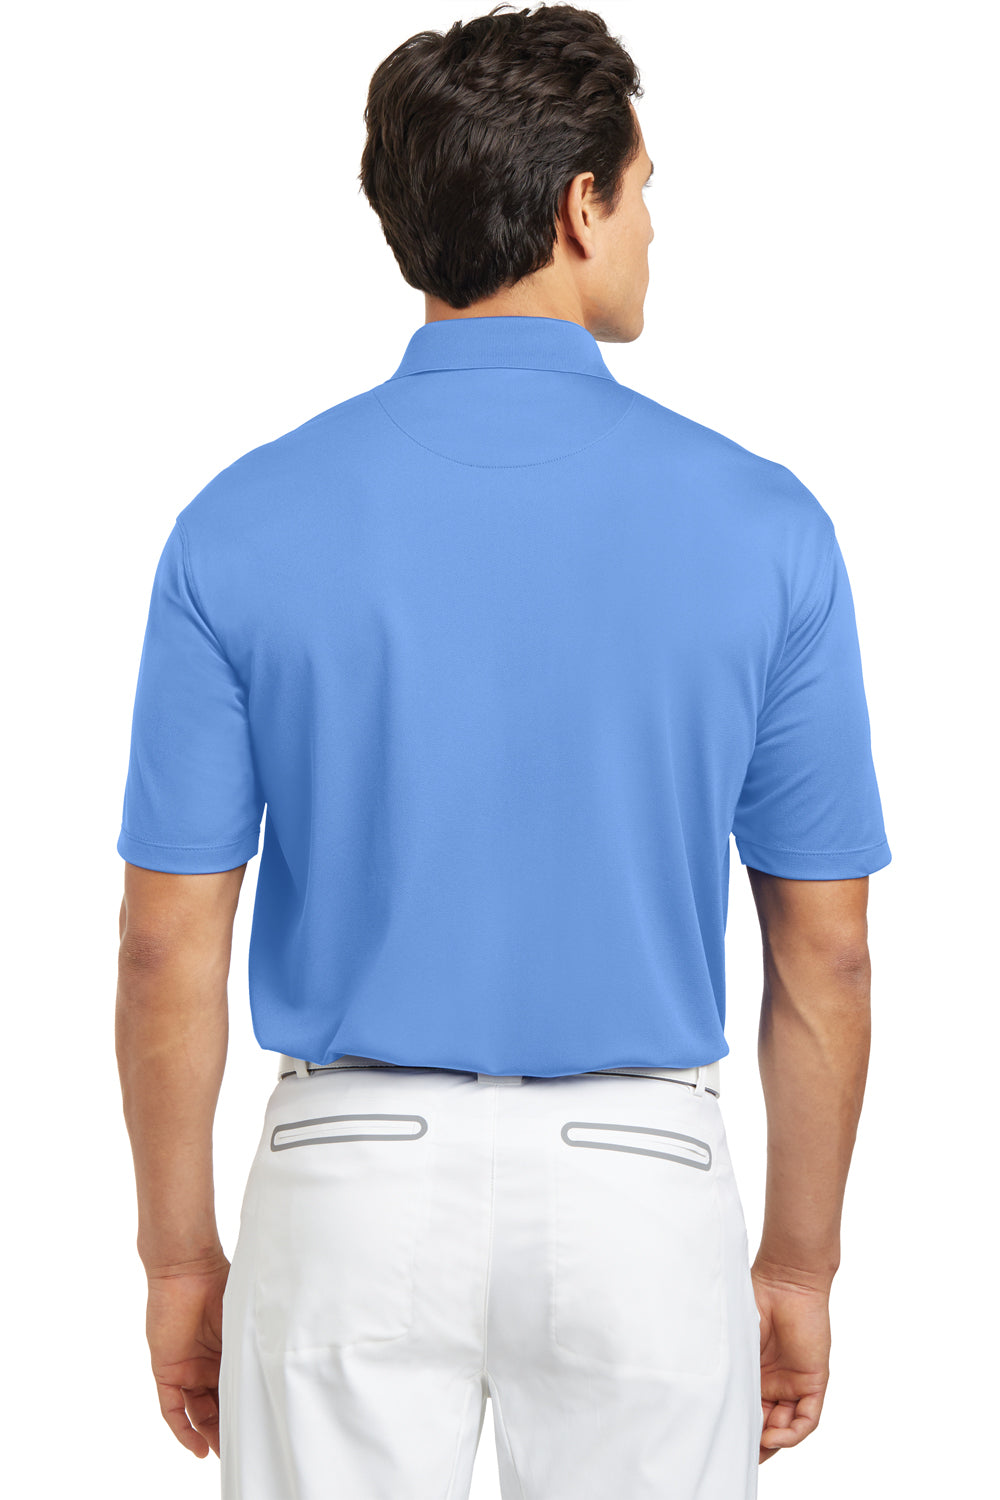 Nike 203690 Mens Tech Basic Dri-Fit Moisture Wicking Short Sleeve Polo Shirt University Blue Model Back